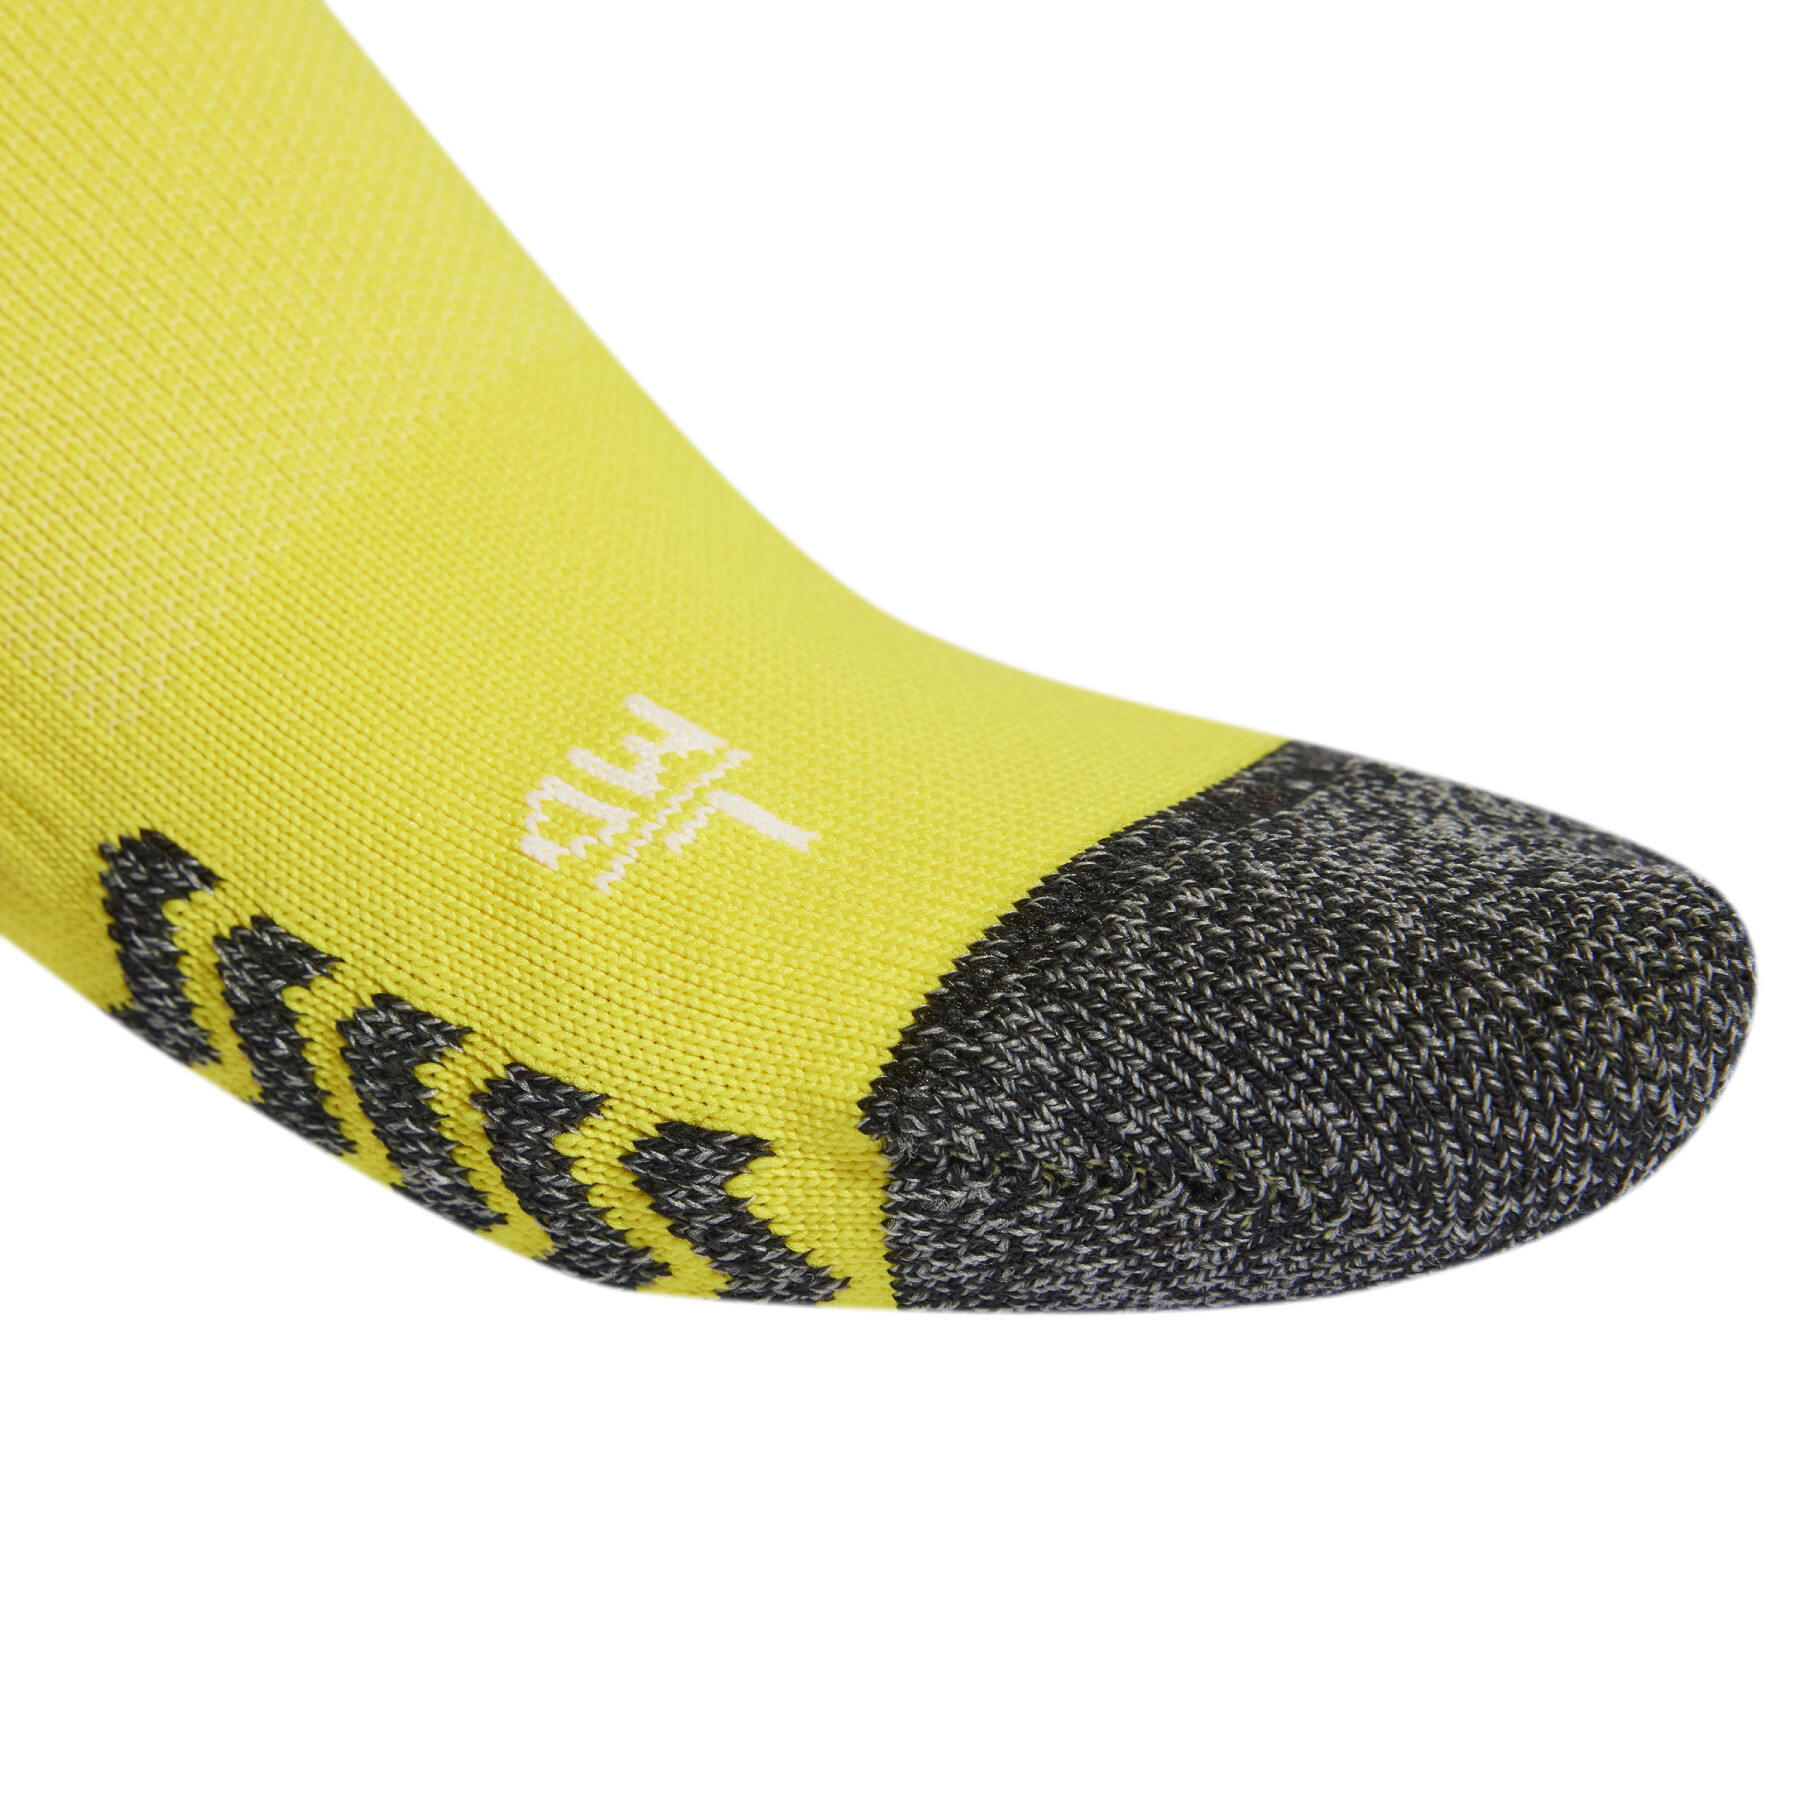 Socken Kind adidas ADI 24